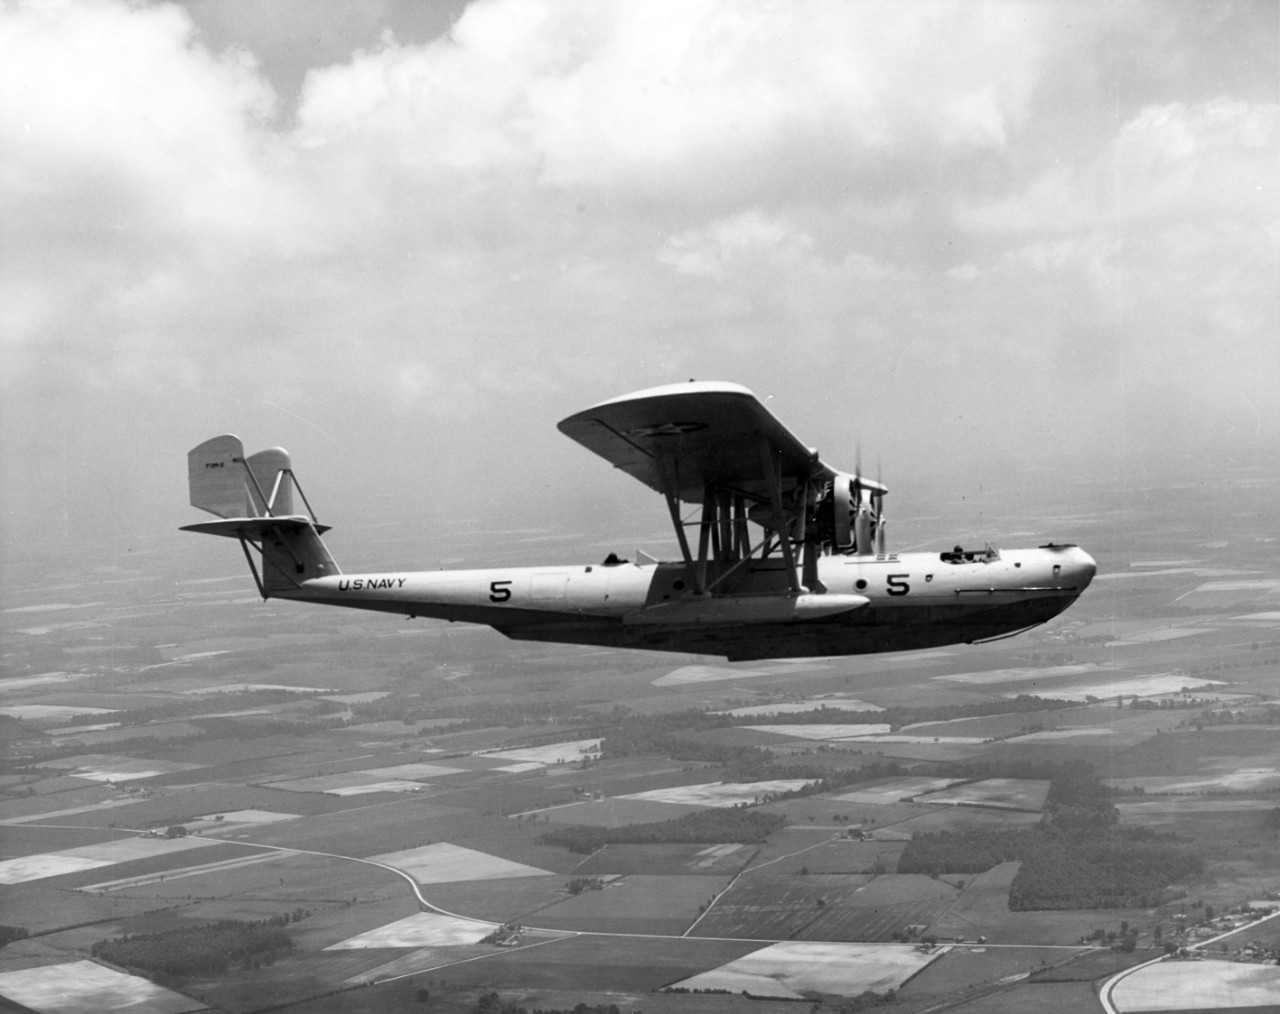 Martin P3M-2 patrol seaplane